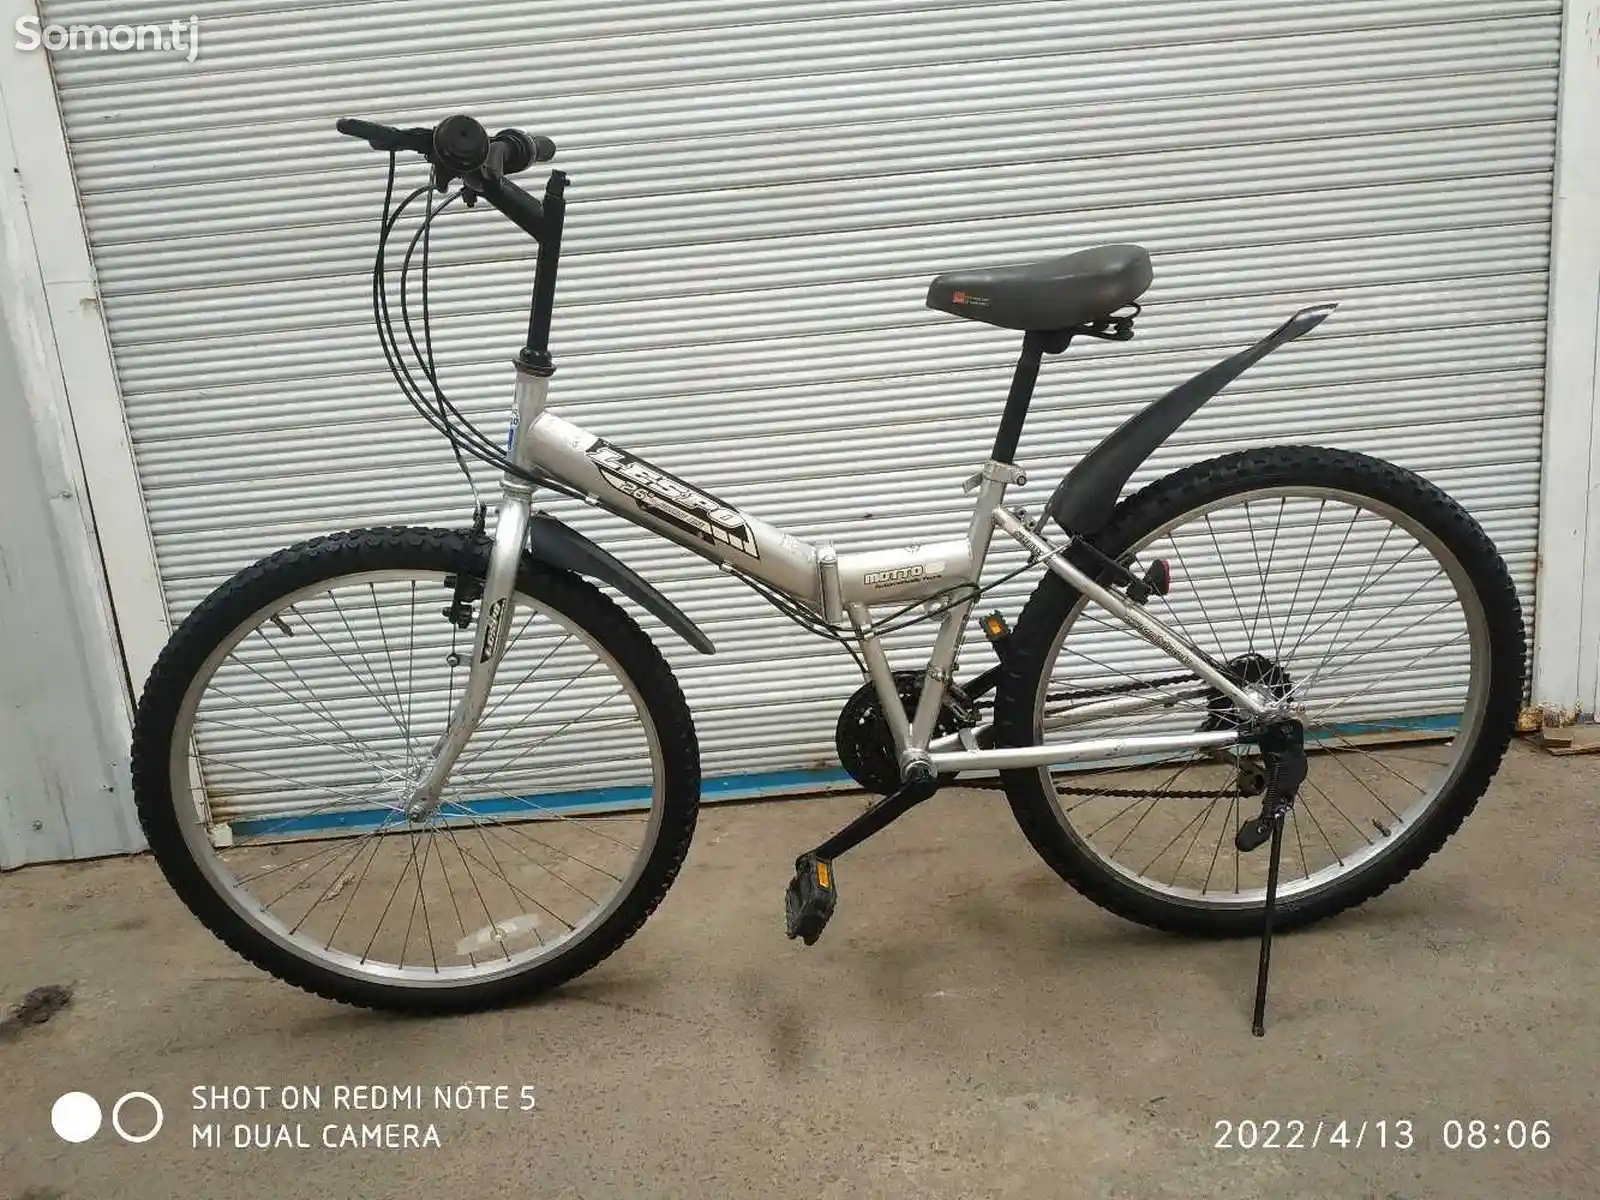 Велосипед корейский